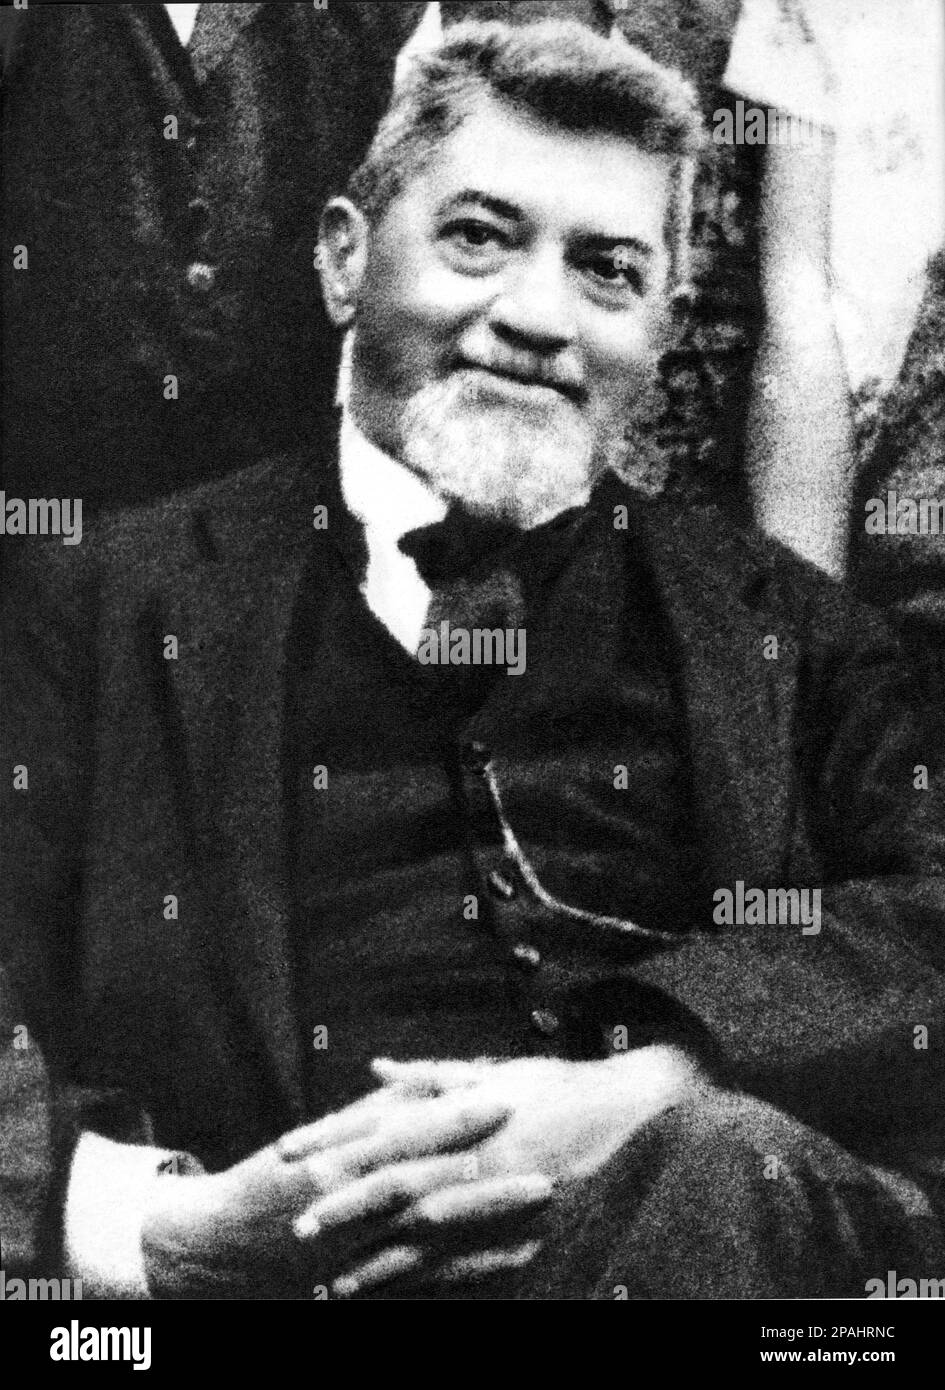 Le politicien socialiste italien, sociologue et poète FILIPPO TURATI ( 1857 – 1932 ) , Amant du socialiste Anna Kulischov - Partito Socialista Rivoluzionario Italiano - POLICO - POLITICA - PSI - POLITIQUE - SOCIALISTE - SOCIALISMO - SOCIALISME - foto storiche - foto storica - moustache - portrait - ritratto - lentille - cravatta - cravate - barbe - barba - ANTIFASCISTA - ANTIFASCISMO --- Archivio GBB Banque D'Images